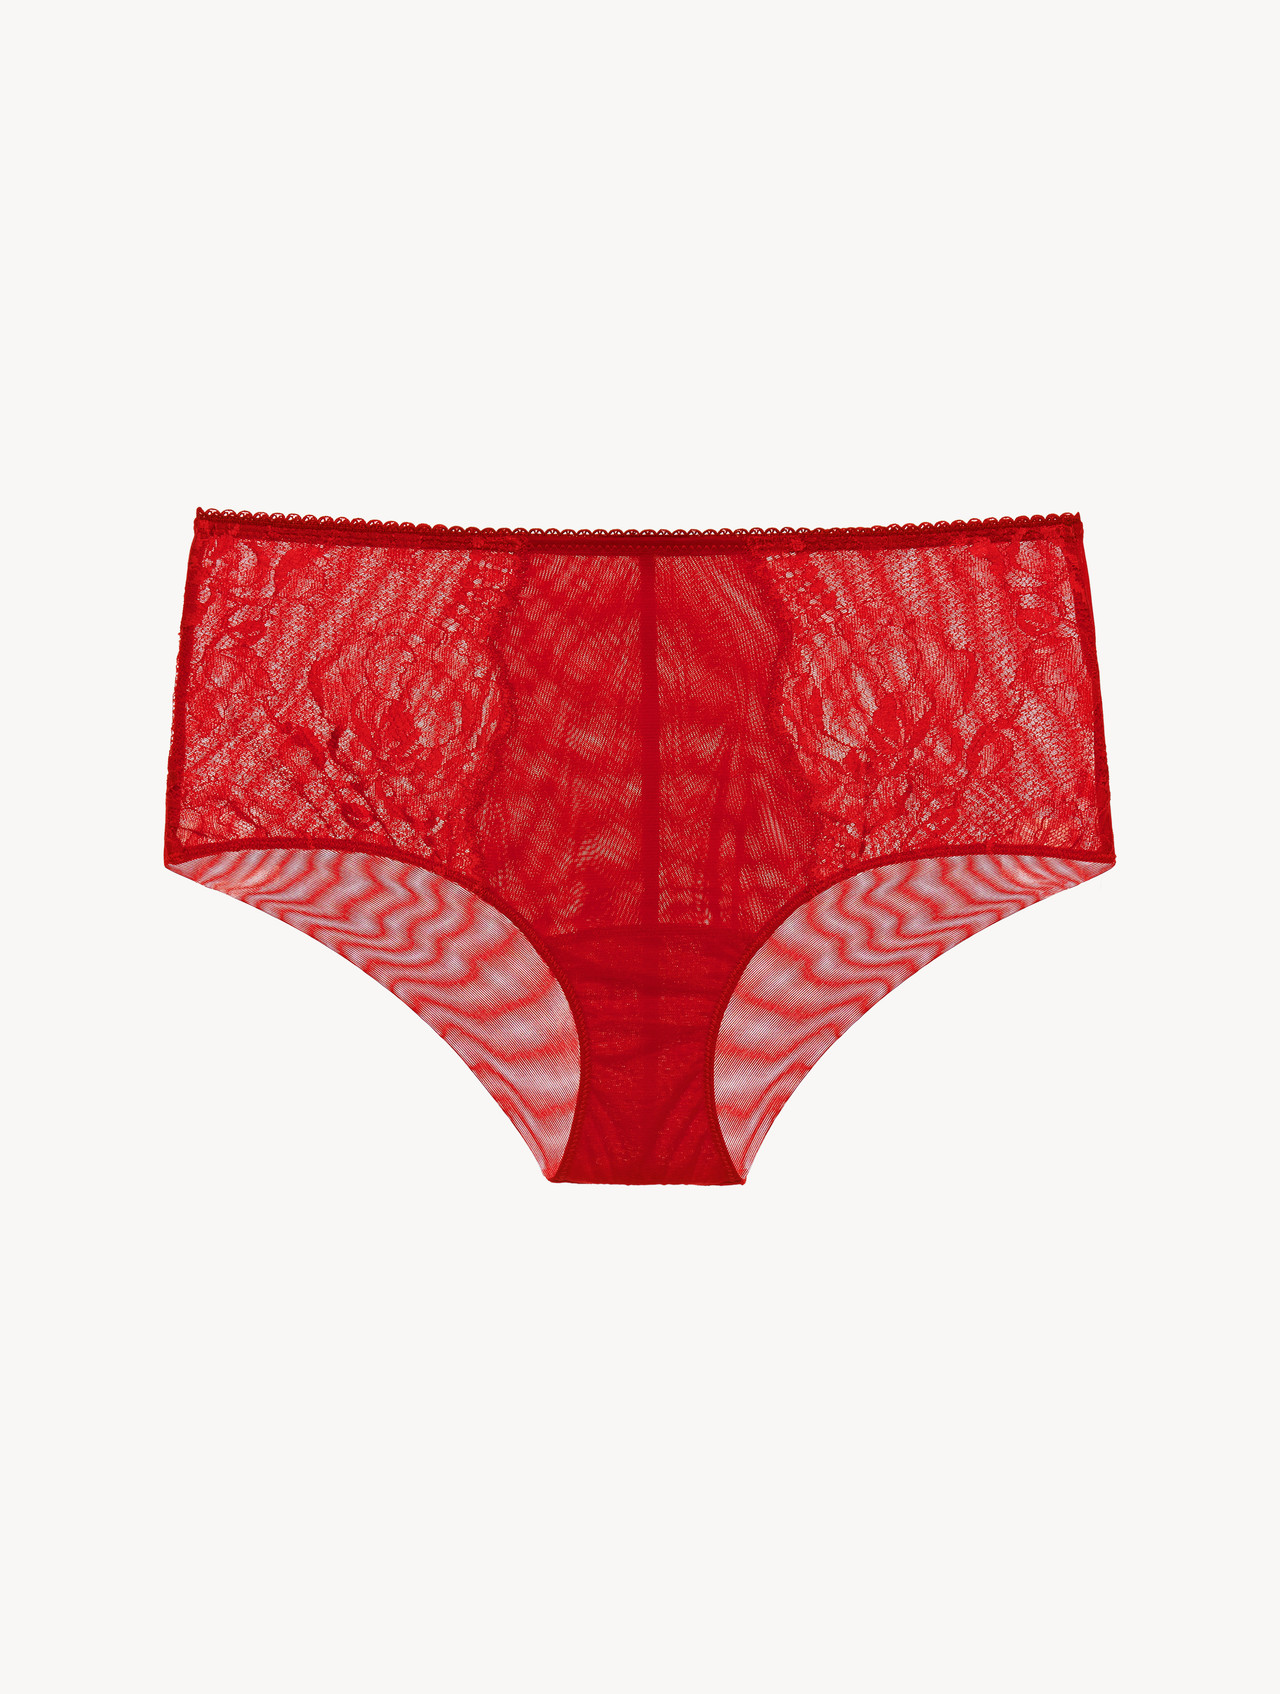 Luxury Lace Boyshort Panties in Red | La Perla